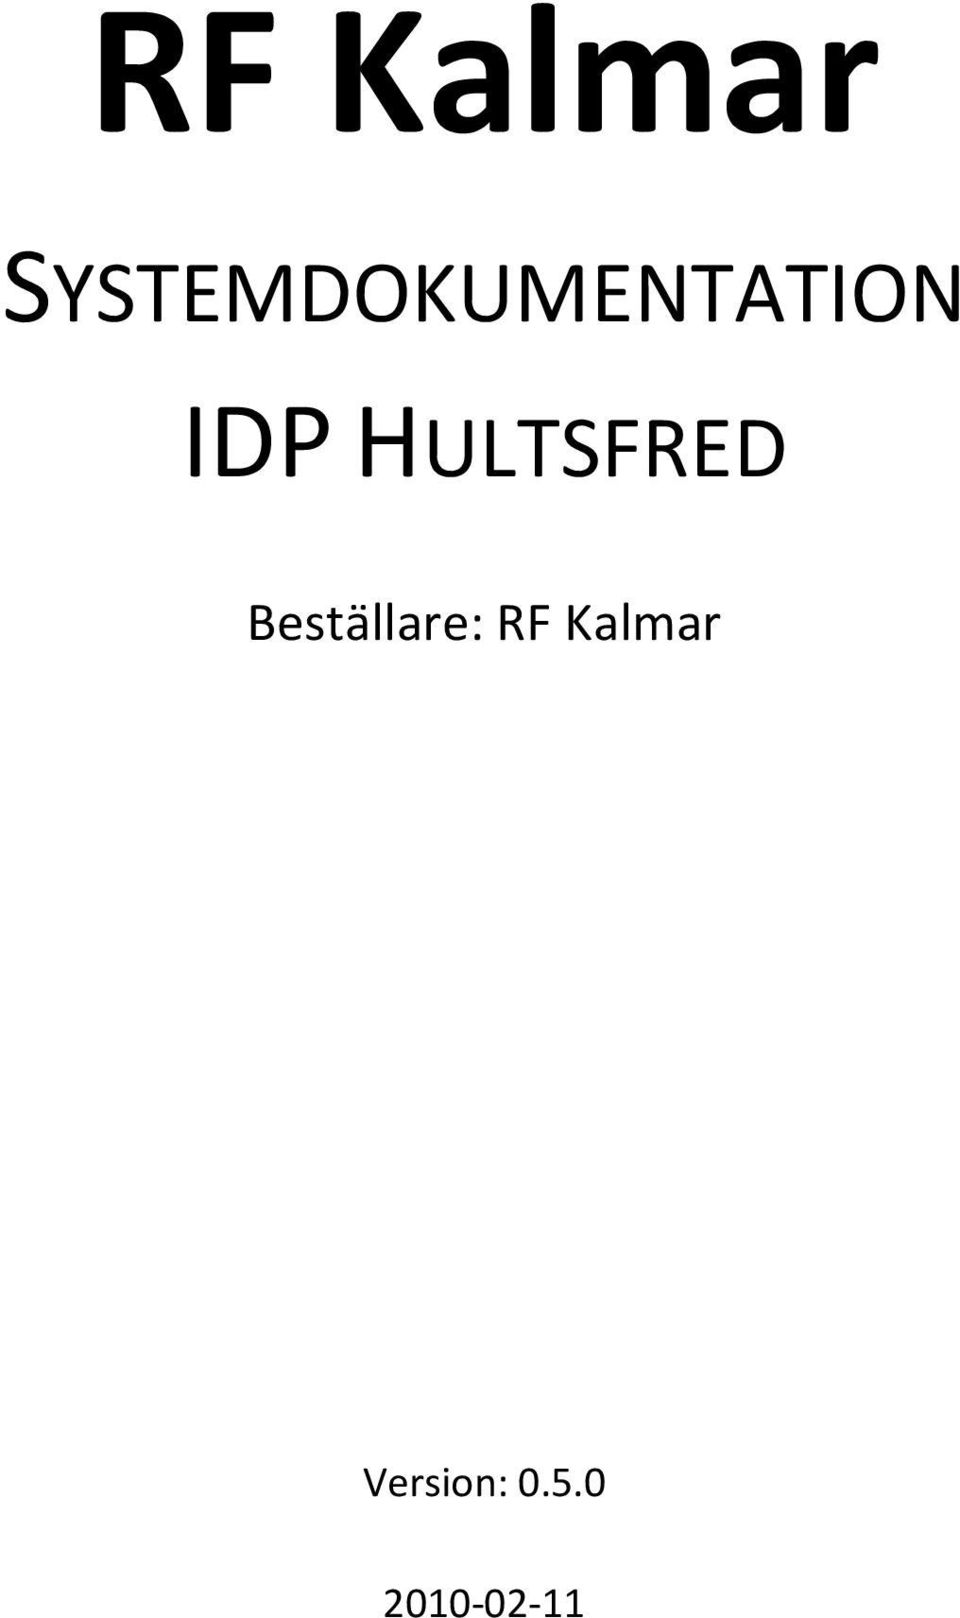 IDP HULTSFRED